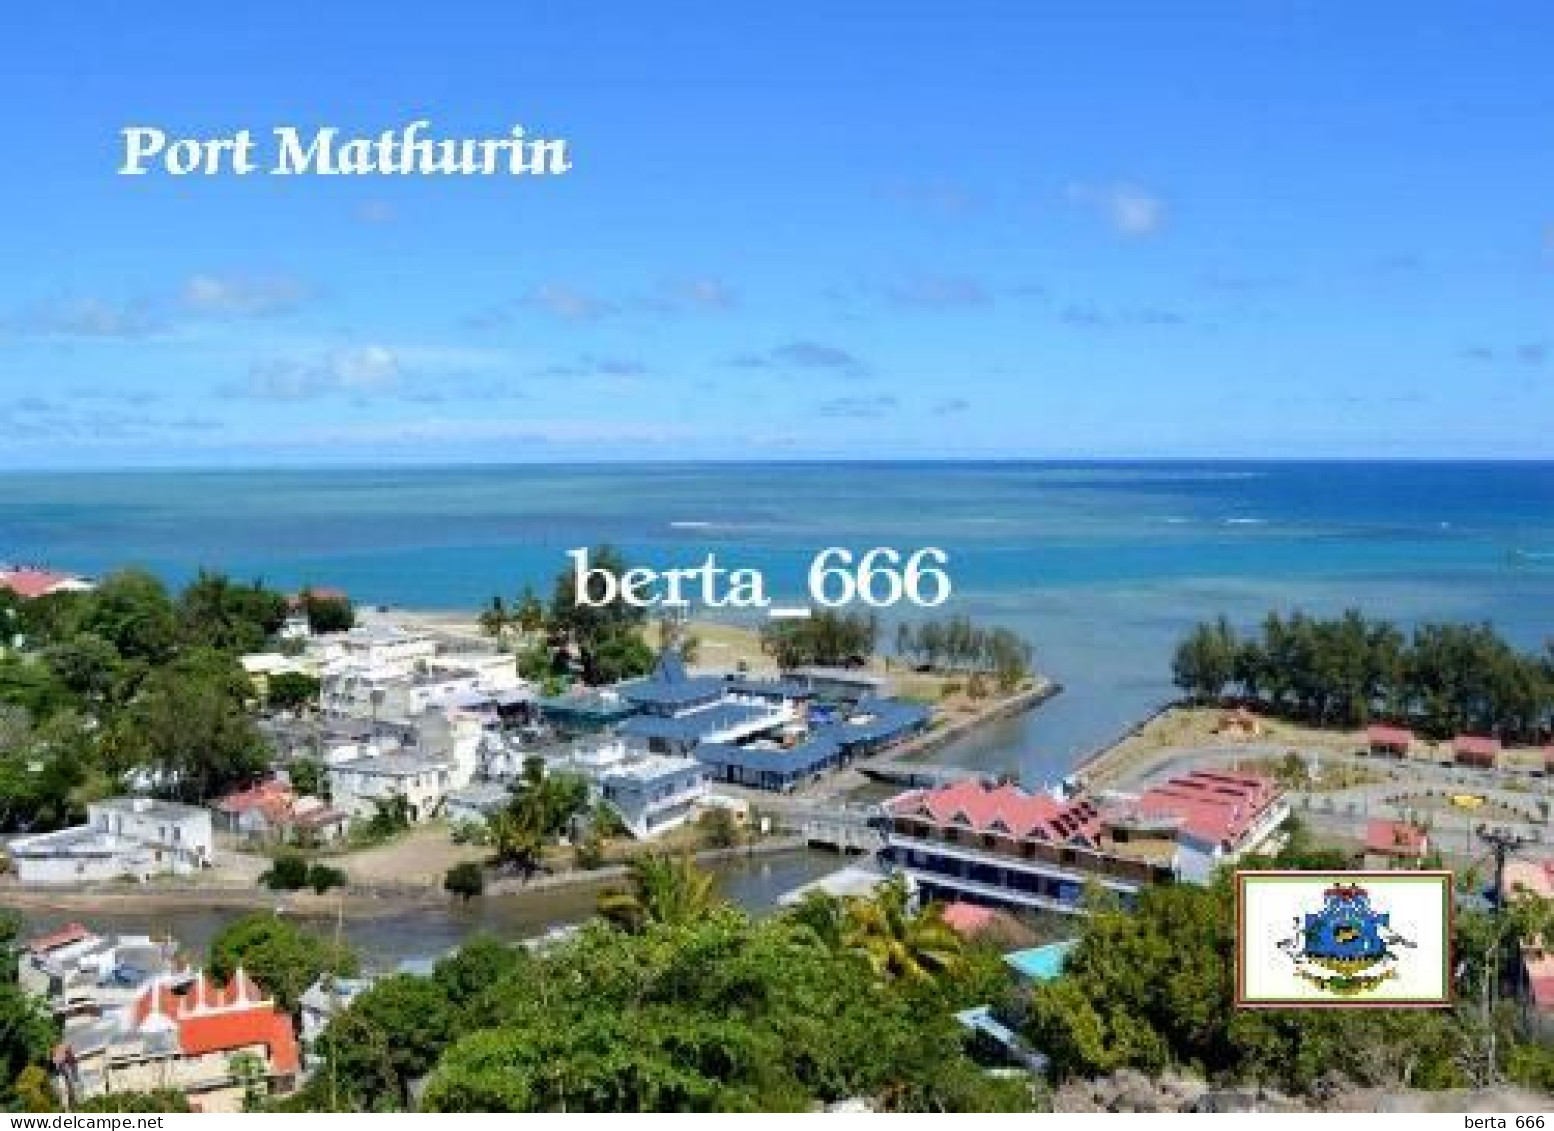 Mauritius Rodrigues Island Port Mathurin New Postcard - Maurice